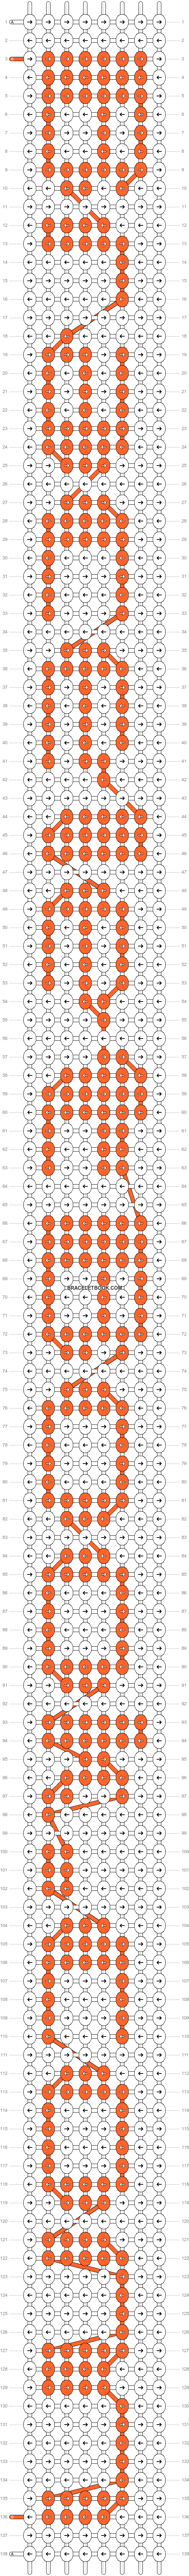 Alpha pattern #510 variation #24720 pattern